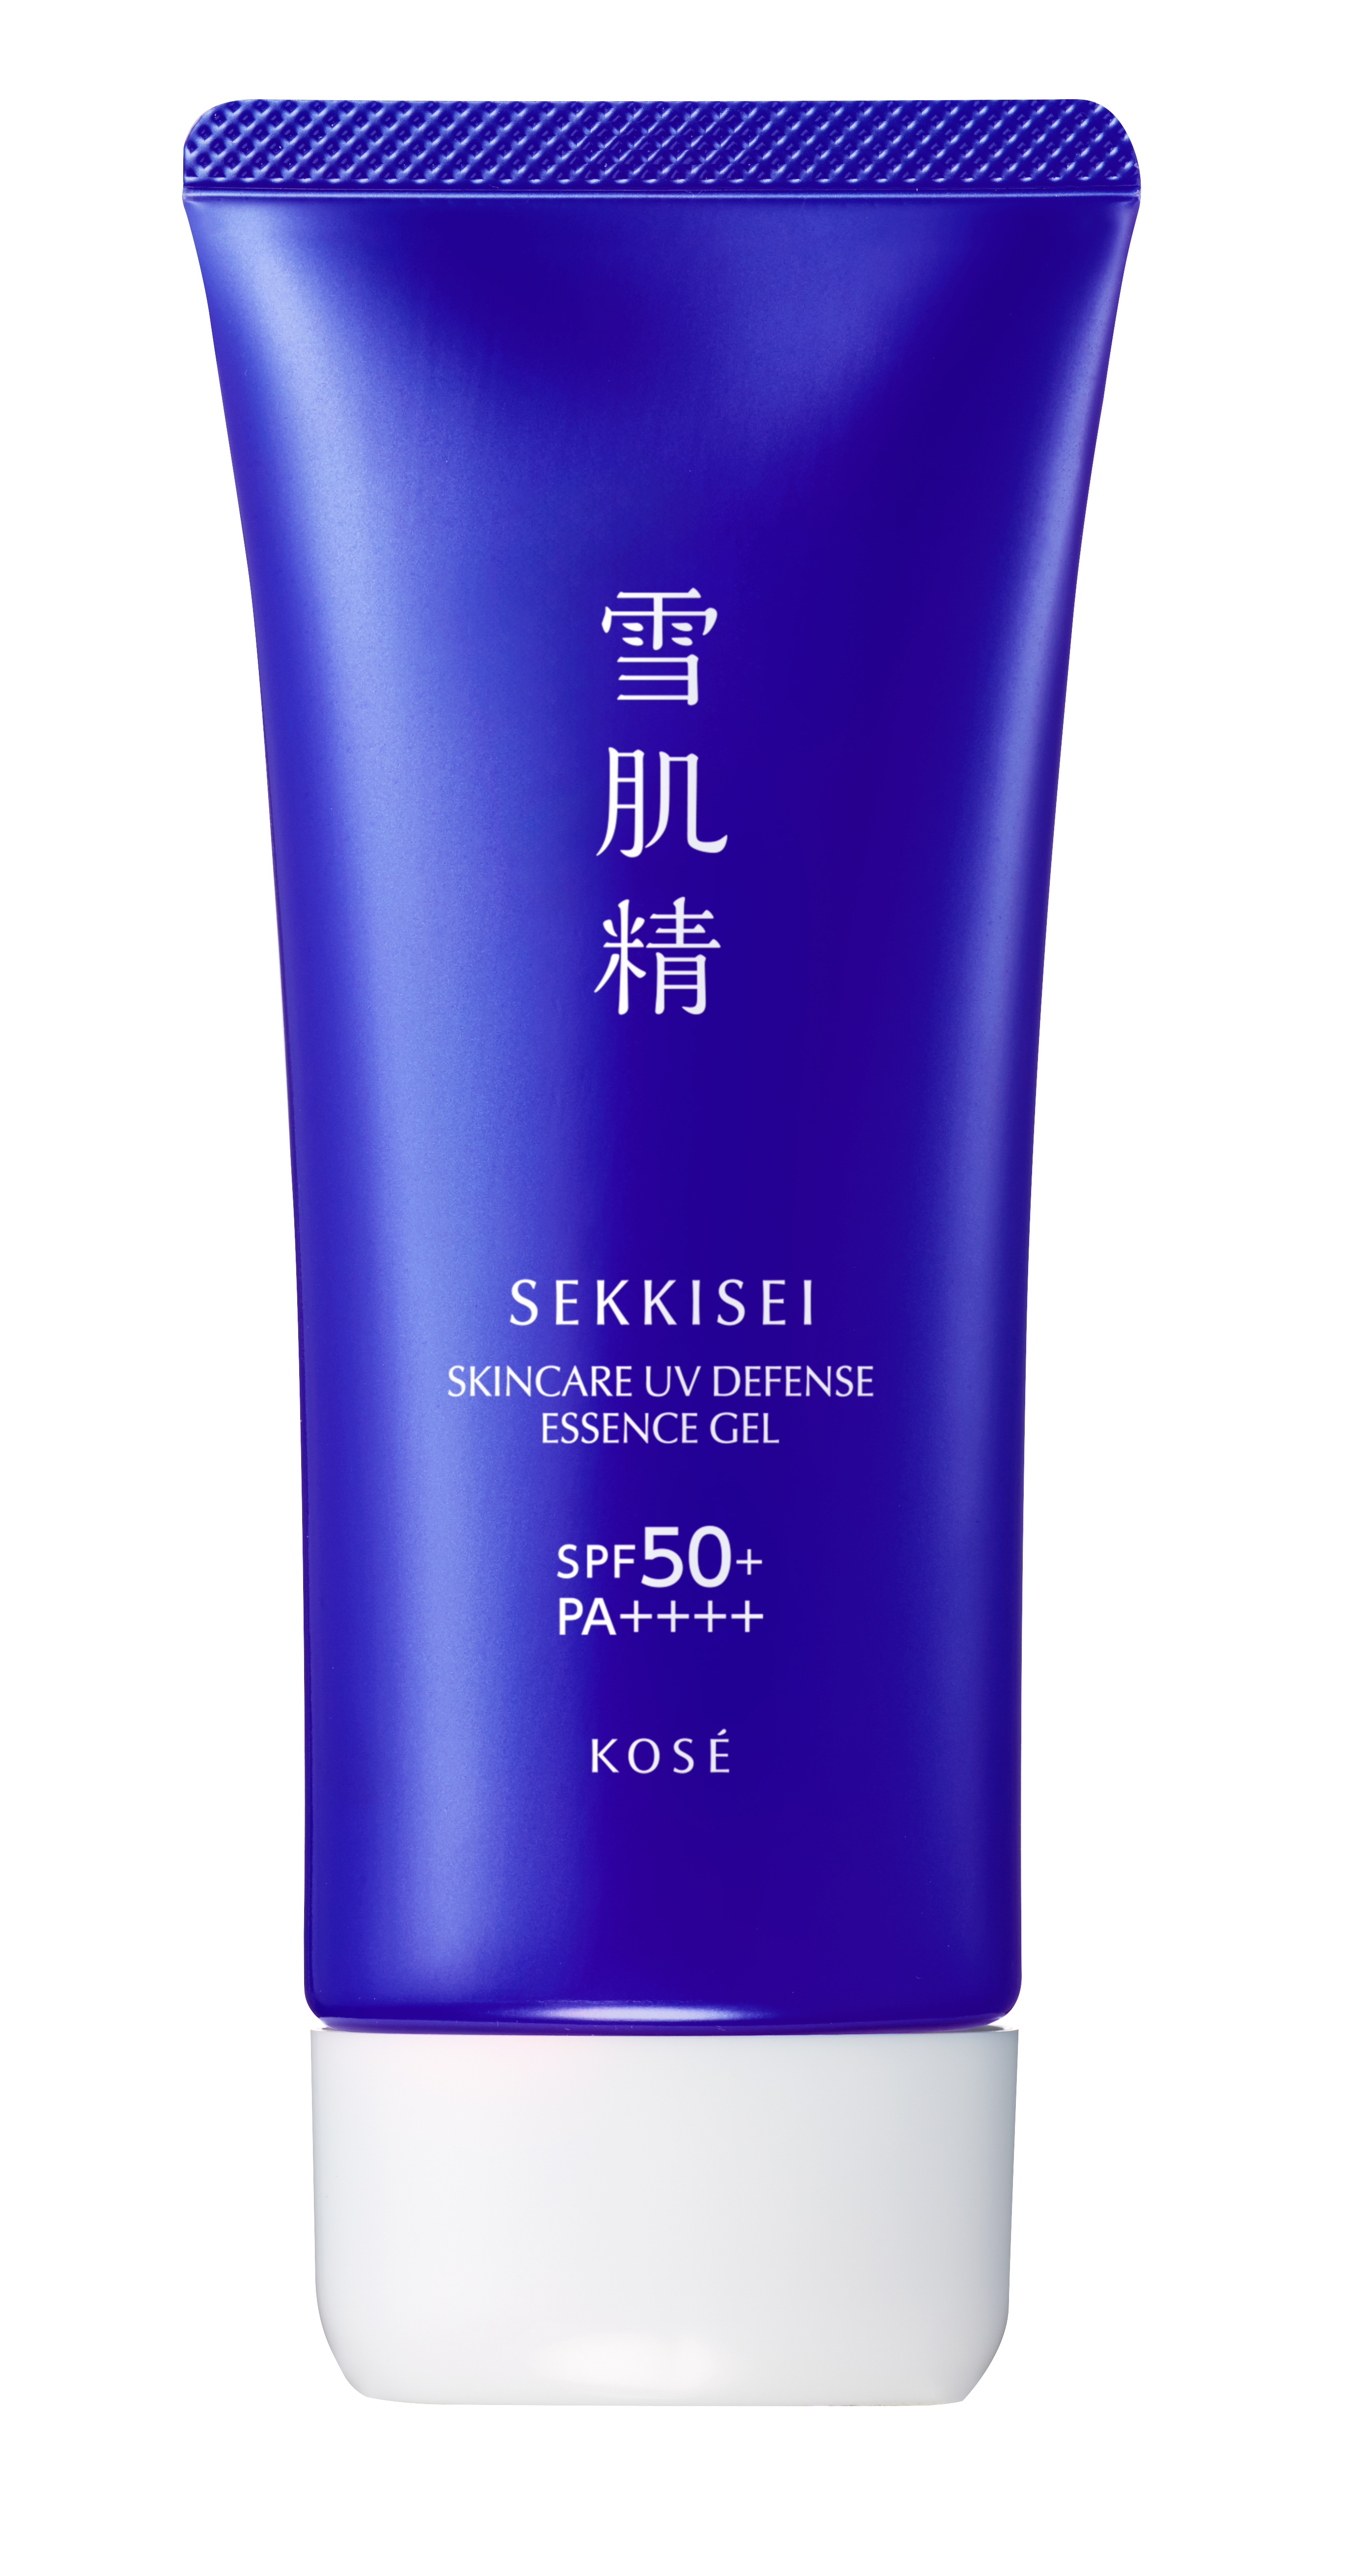 kose-sekkisei-skincare-uv-defense-essence-gel-90g